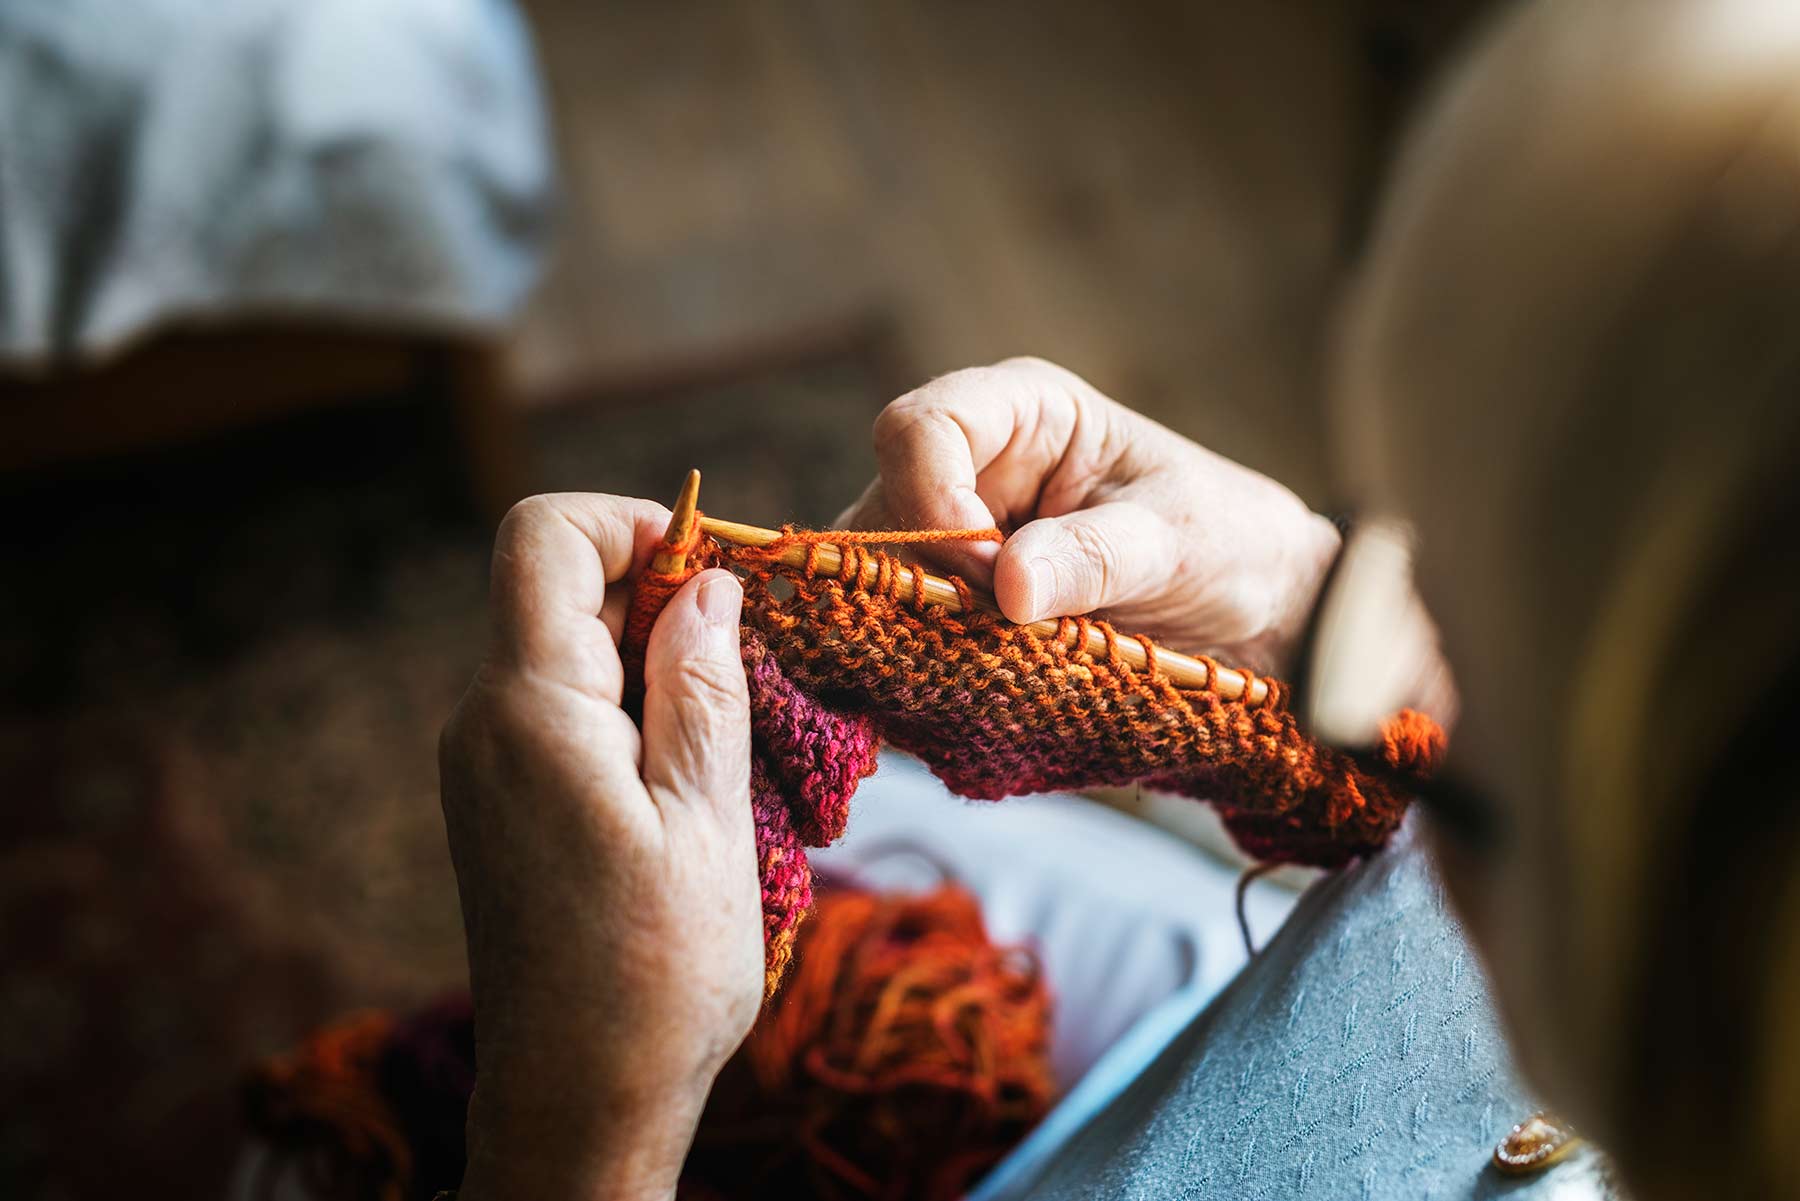 senior woman knitting for hobby at home 2022 09 16 08 10 13 utc